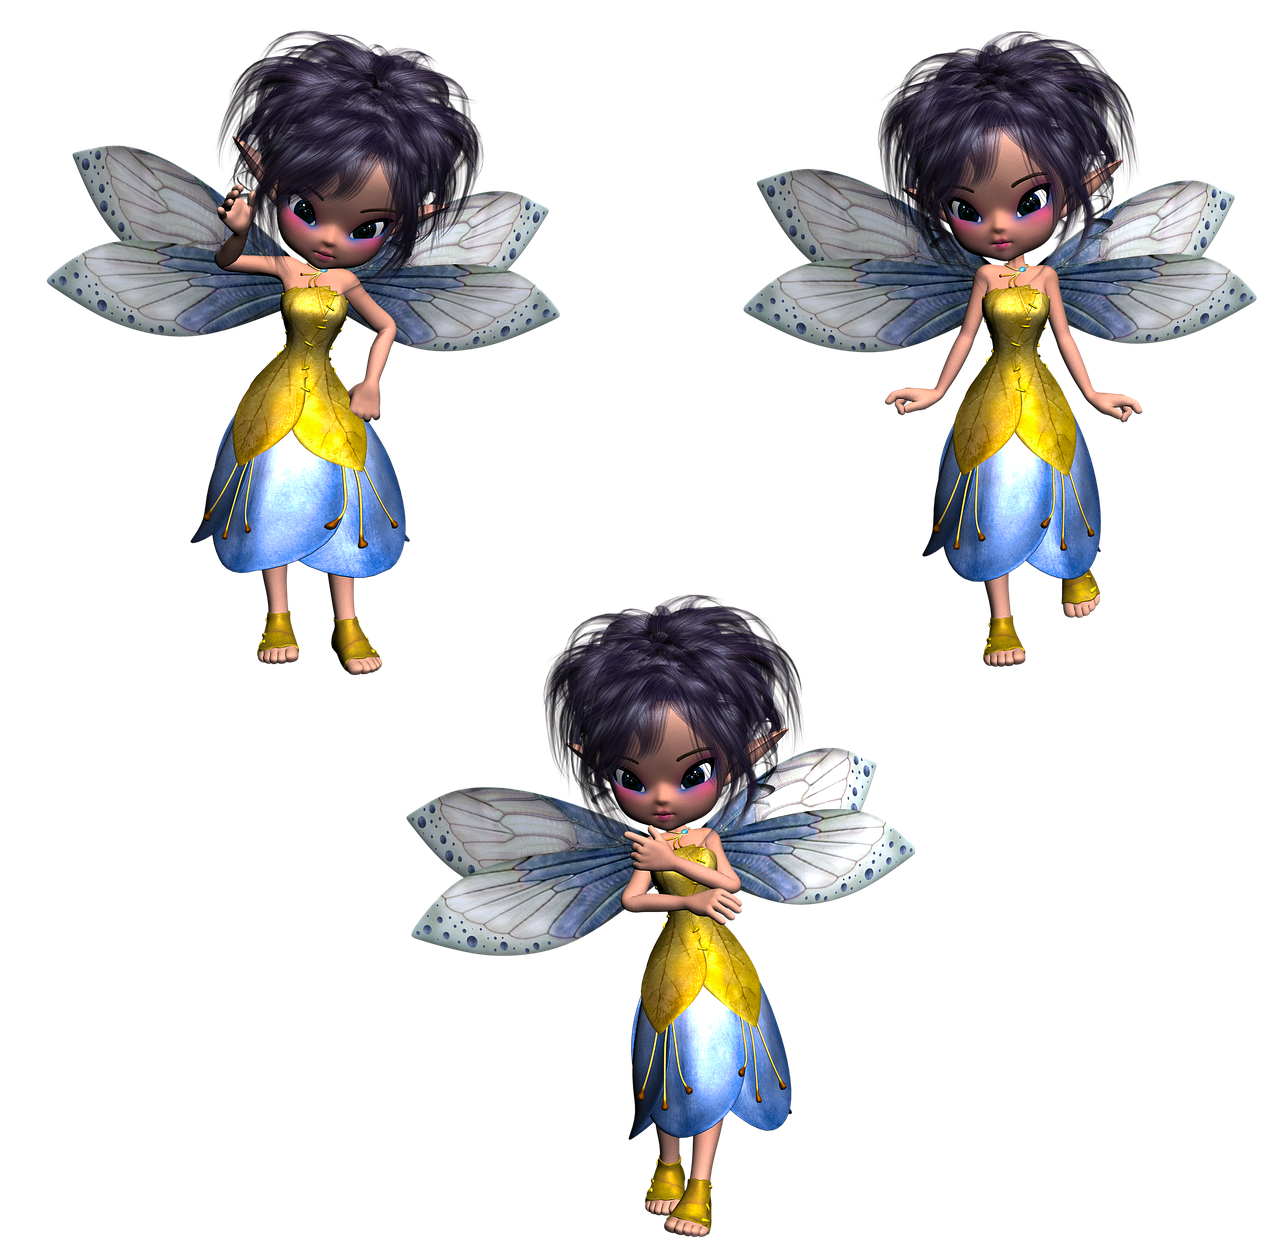 Download free photo of Fairy,sprite,elf,pixie,fantasy - from needpix.com